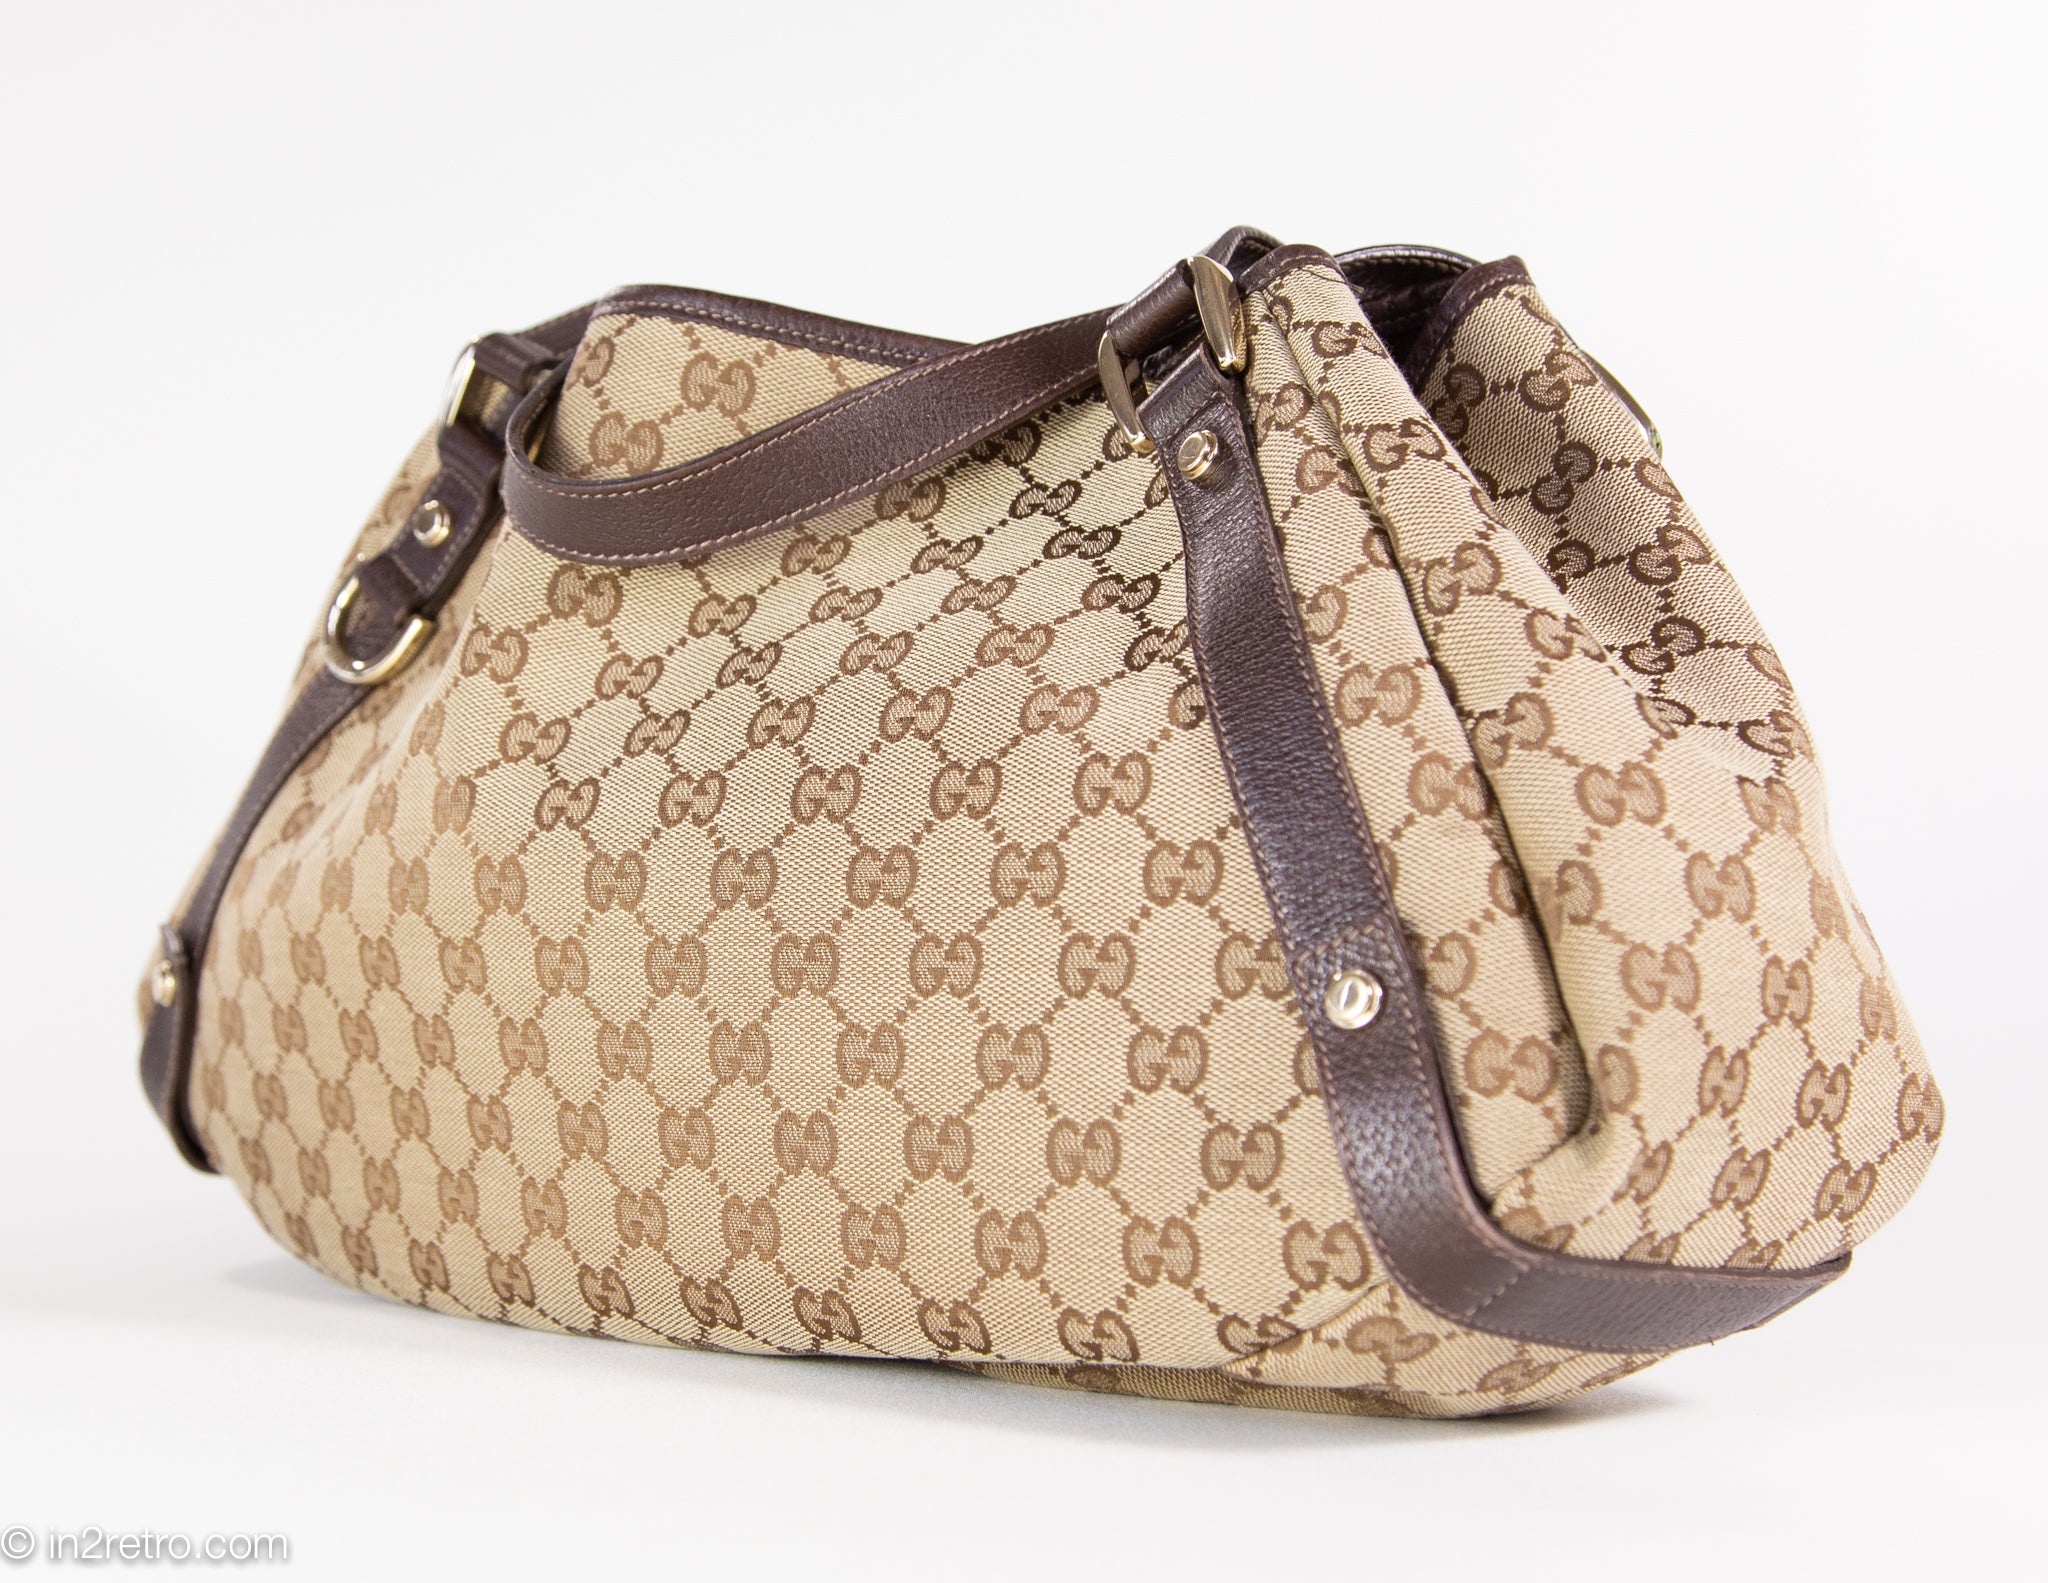 Gucci Bag Authentic Gucci Monogram Leather Hobo Shoulder Bag 